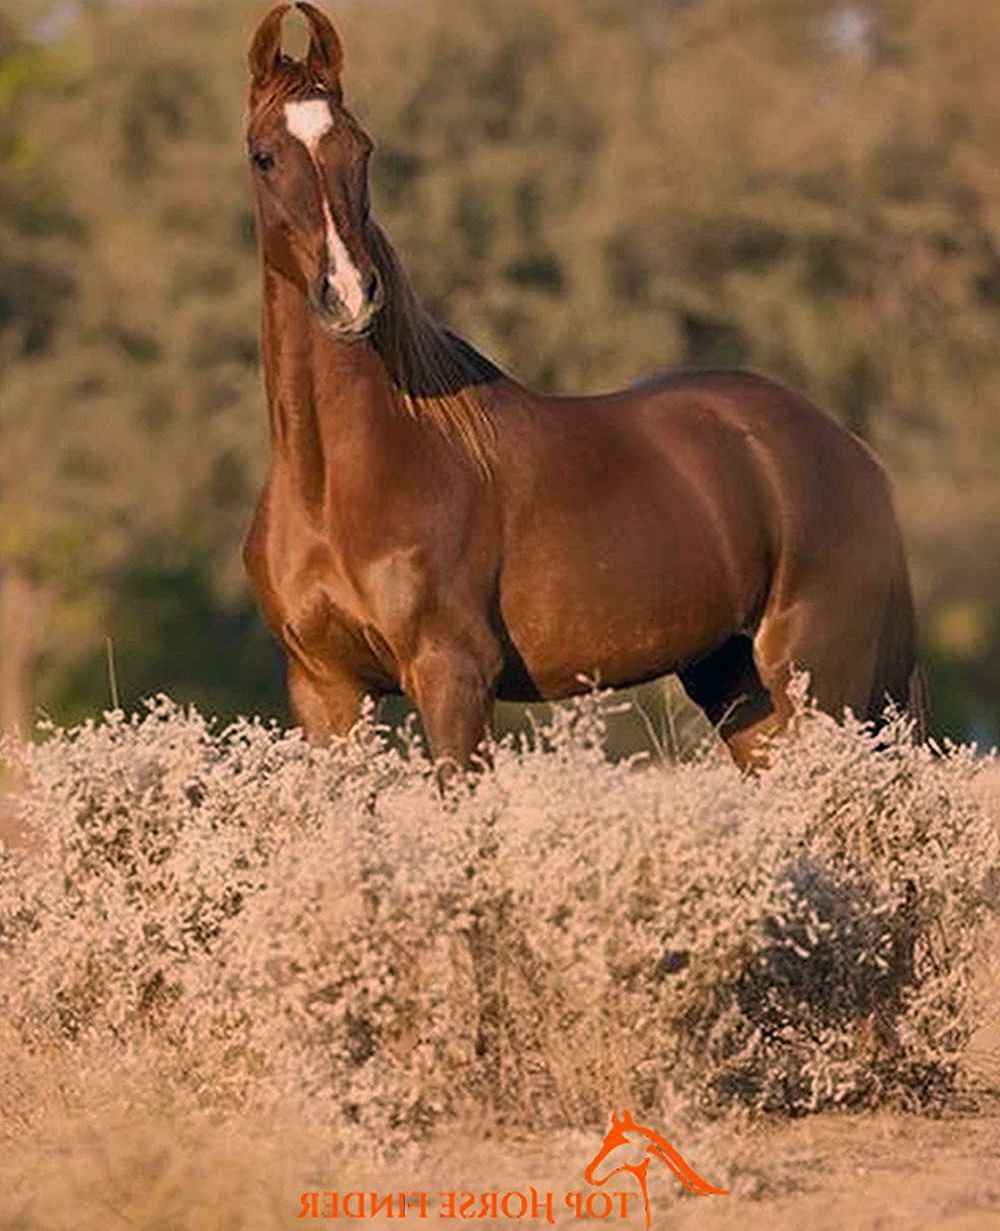 Indian horse. Марвари лошадь. Индийские лошади марвари. Лошади породы марвари. Индийская порода лошадей марвари.